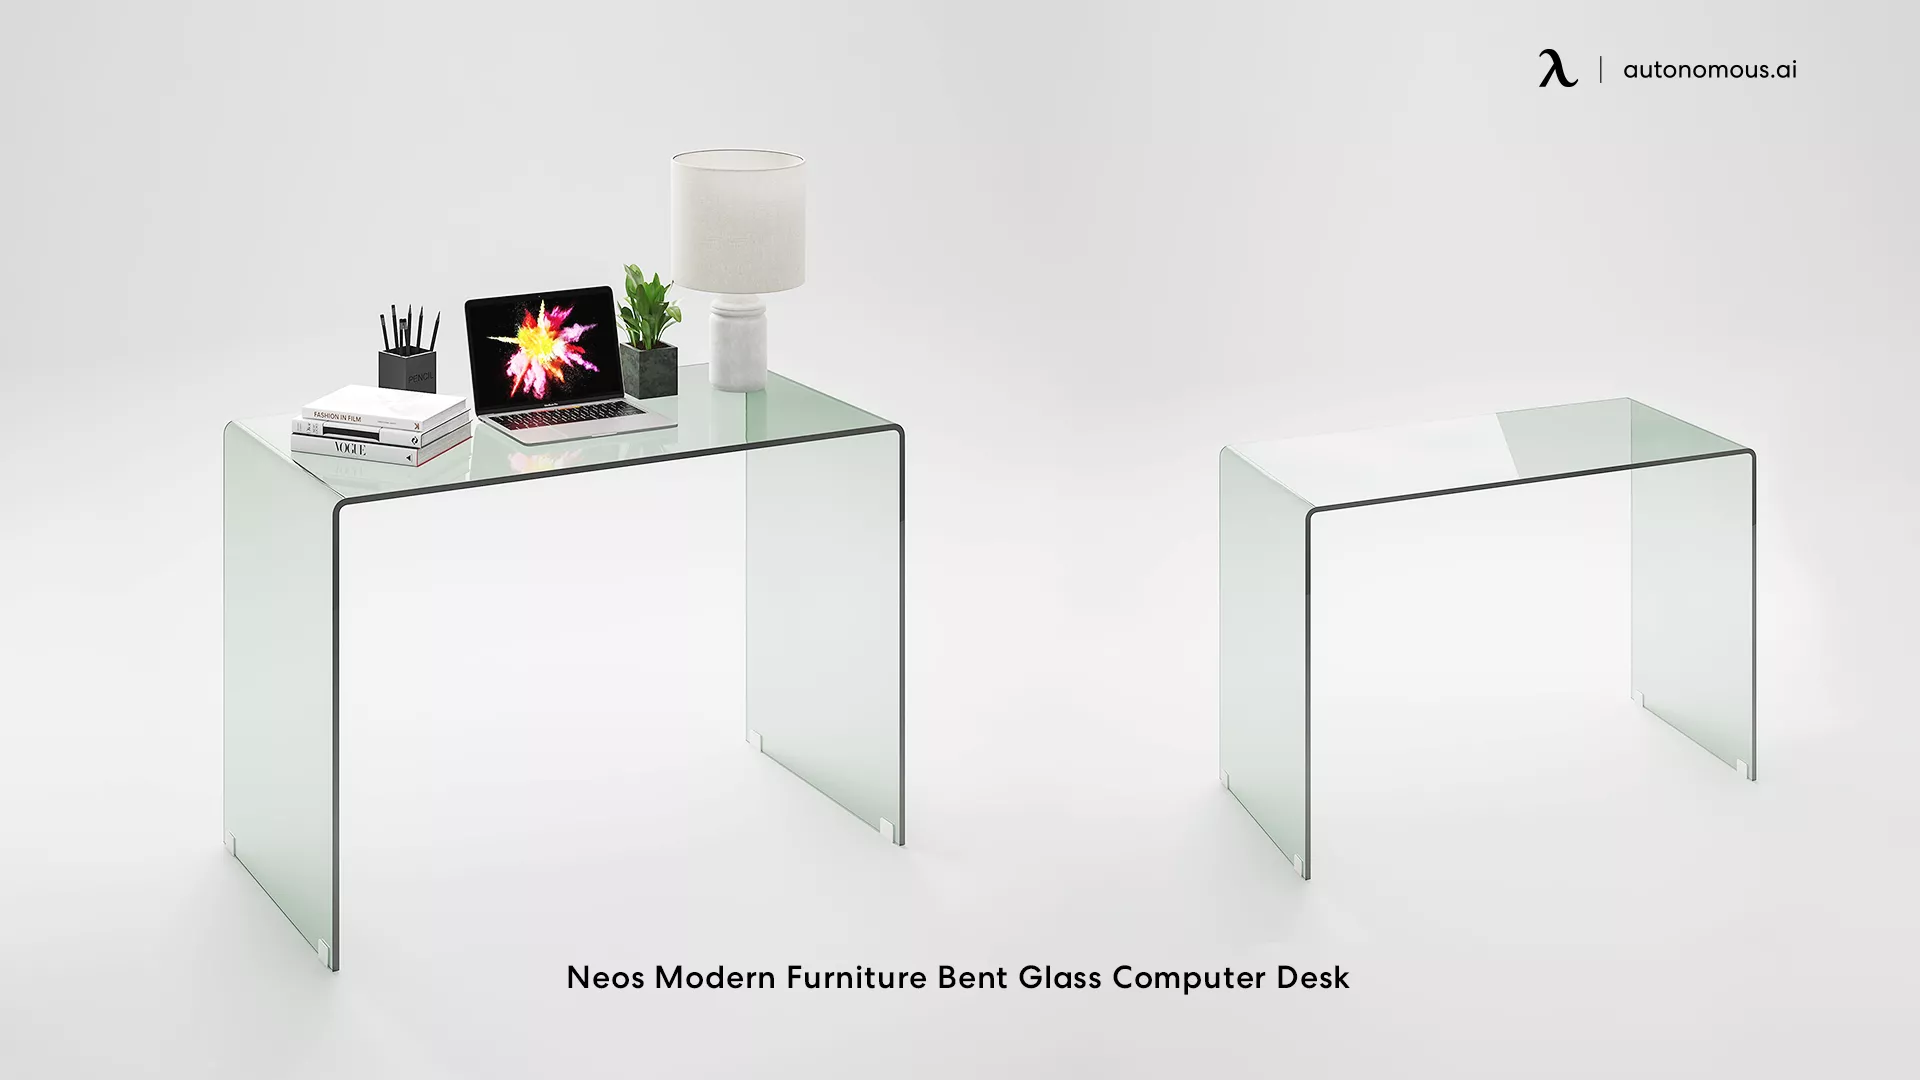 Neos Modern Furniture Bent Glass Computer Desk